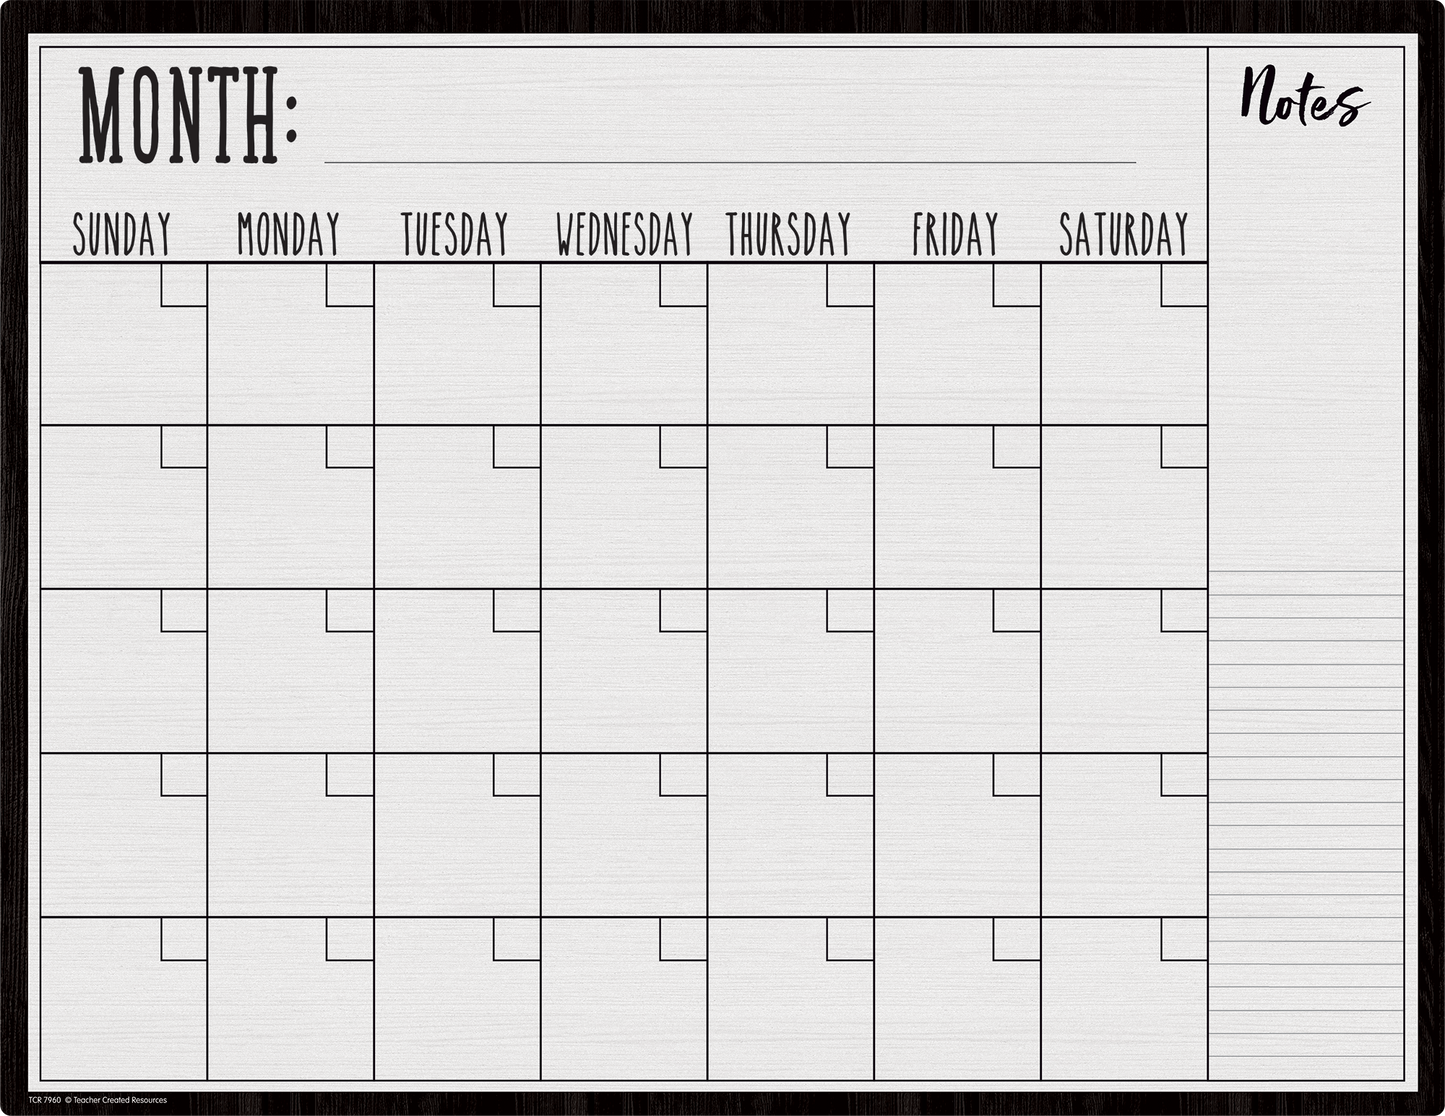 Modern Farmhouse Calendar Write-On/Wipe-Off Chart